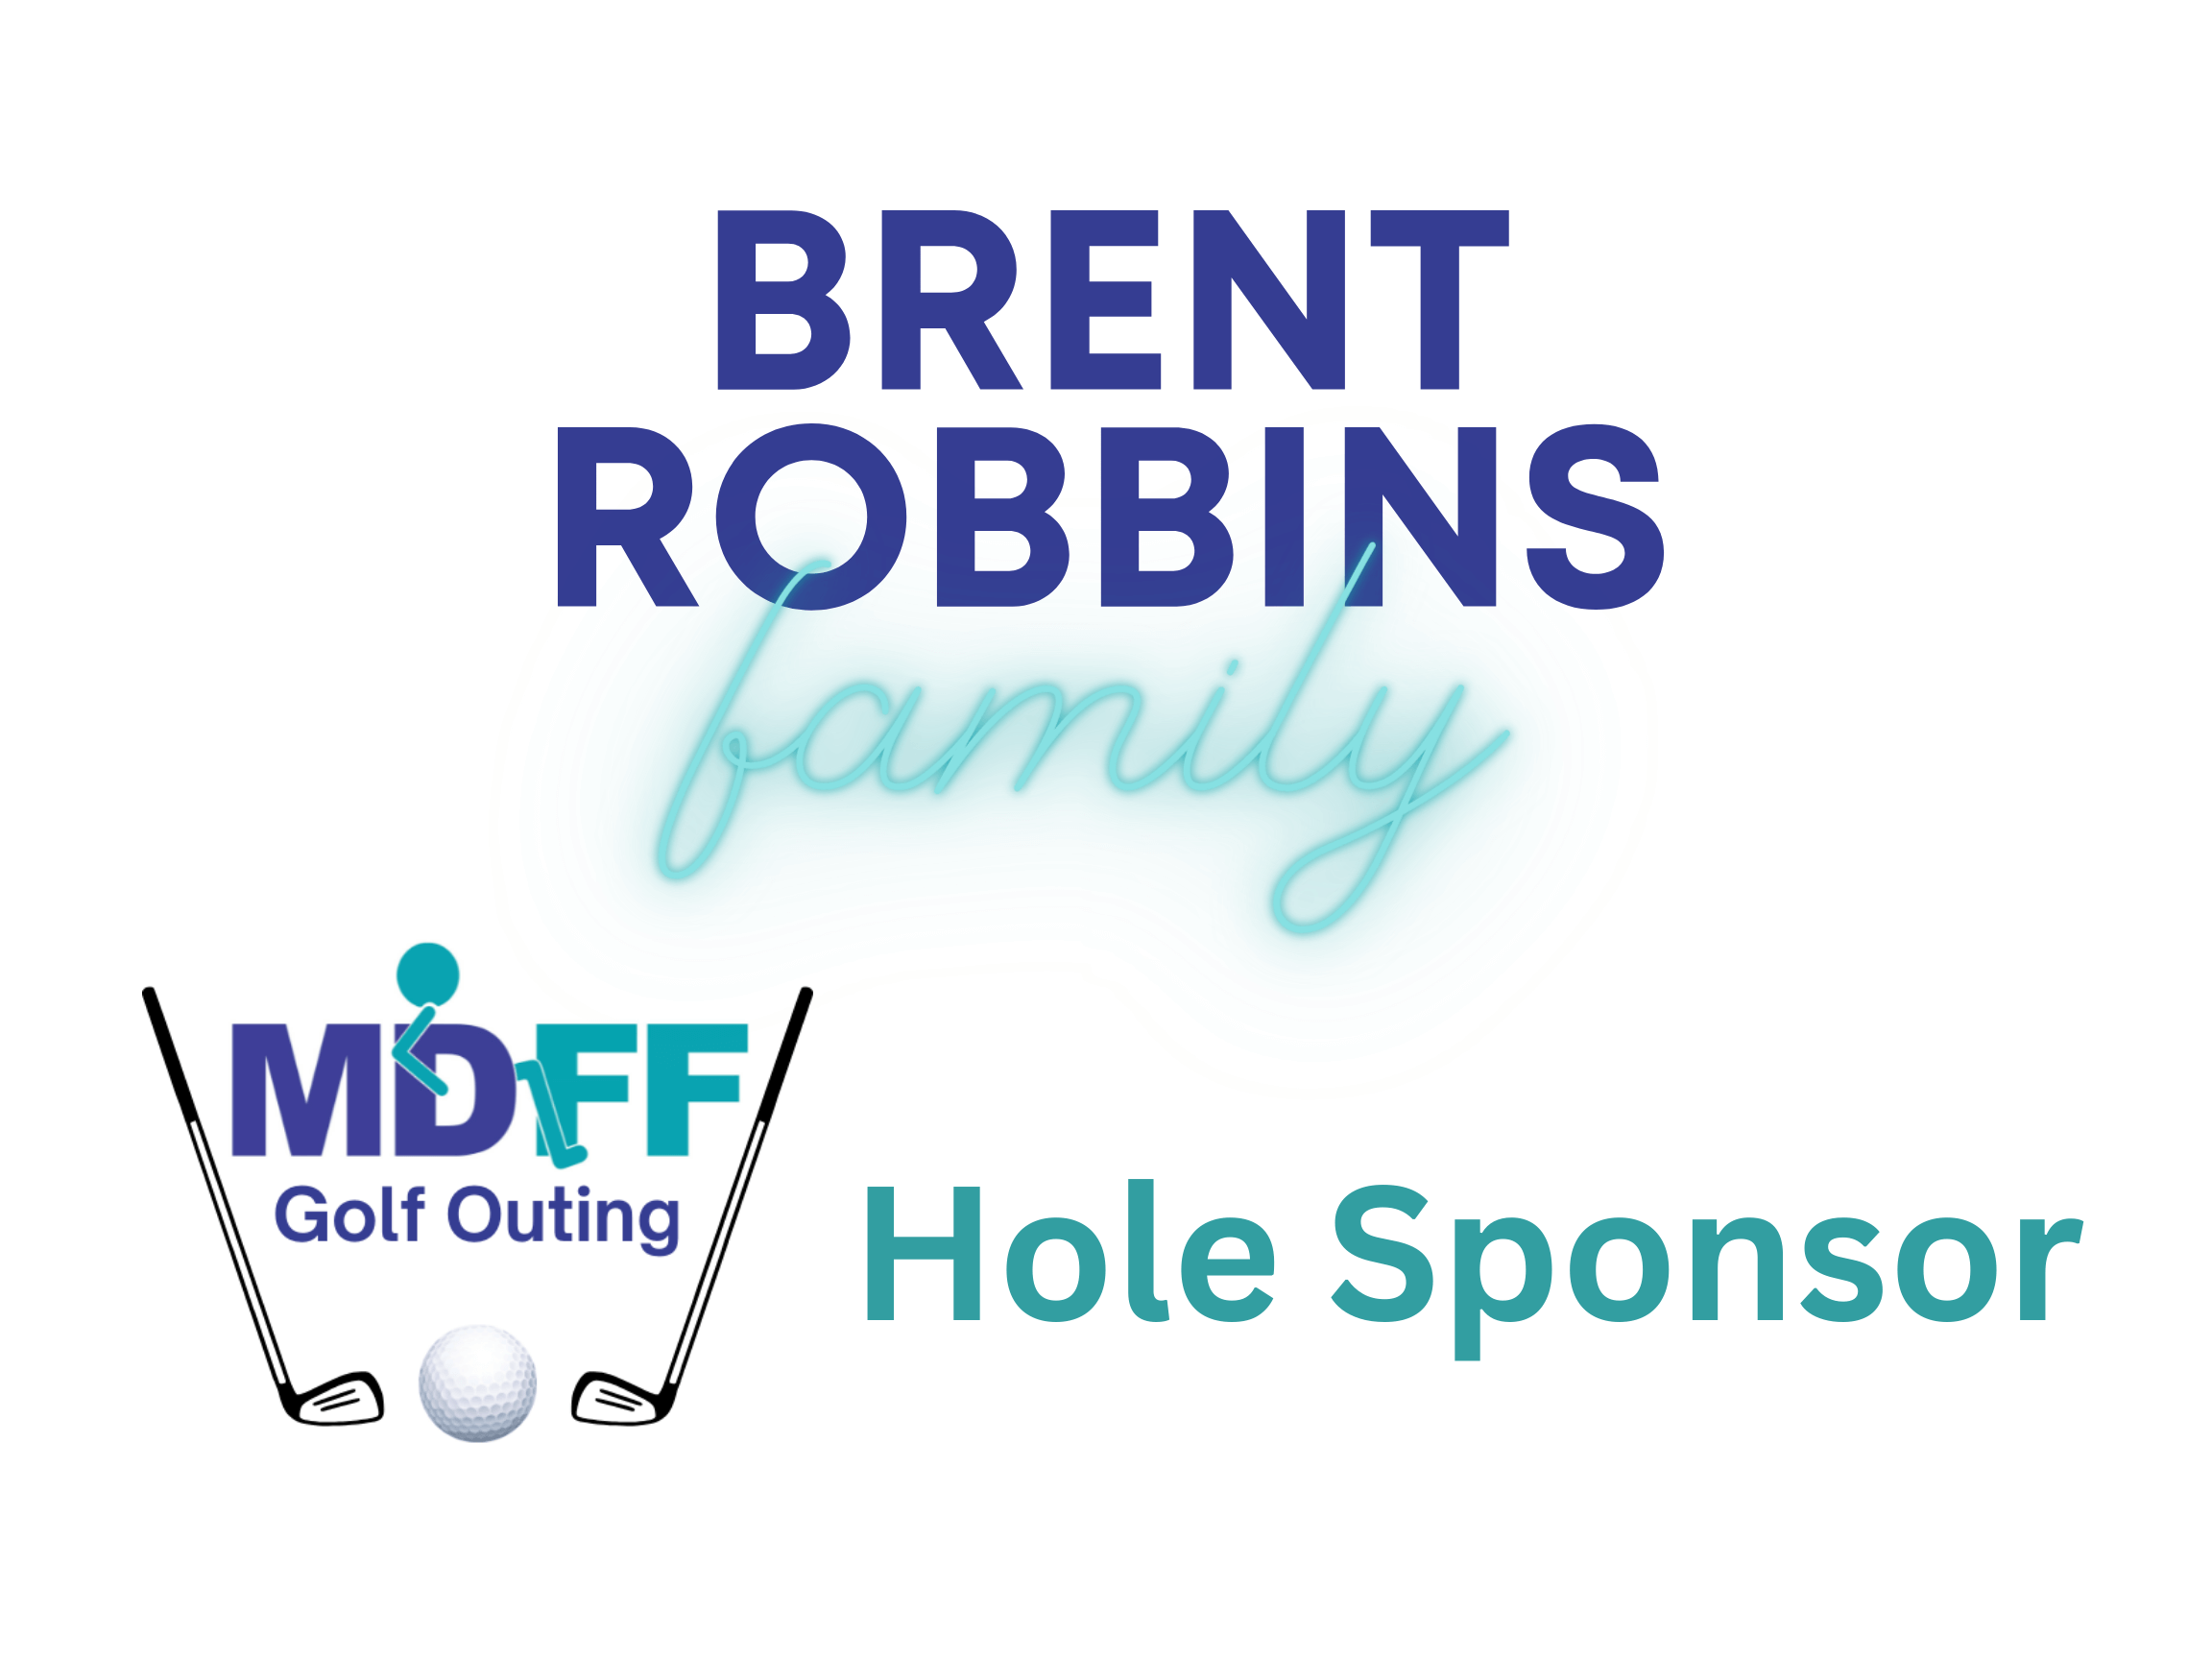 Brent Robbins Family Logo